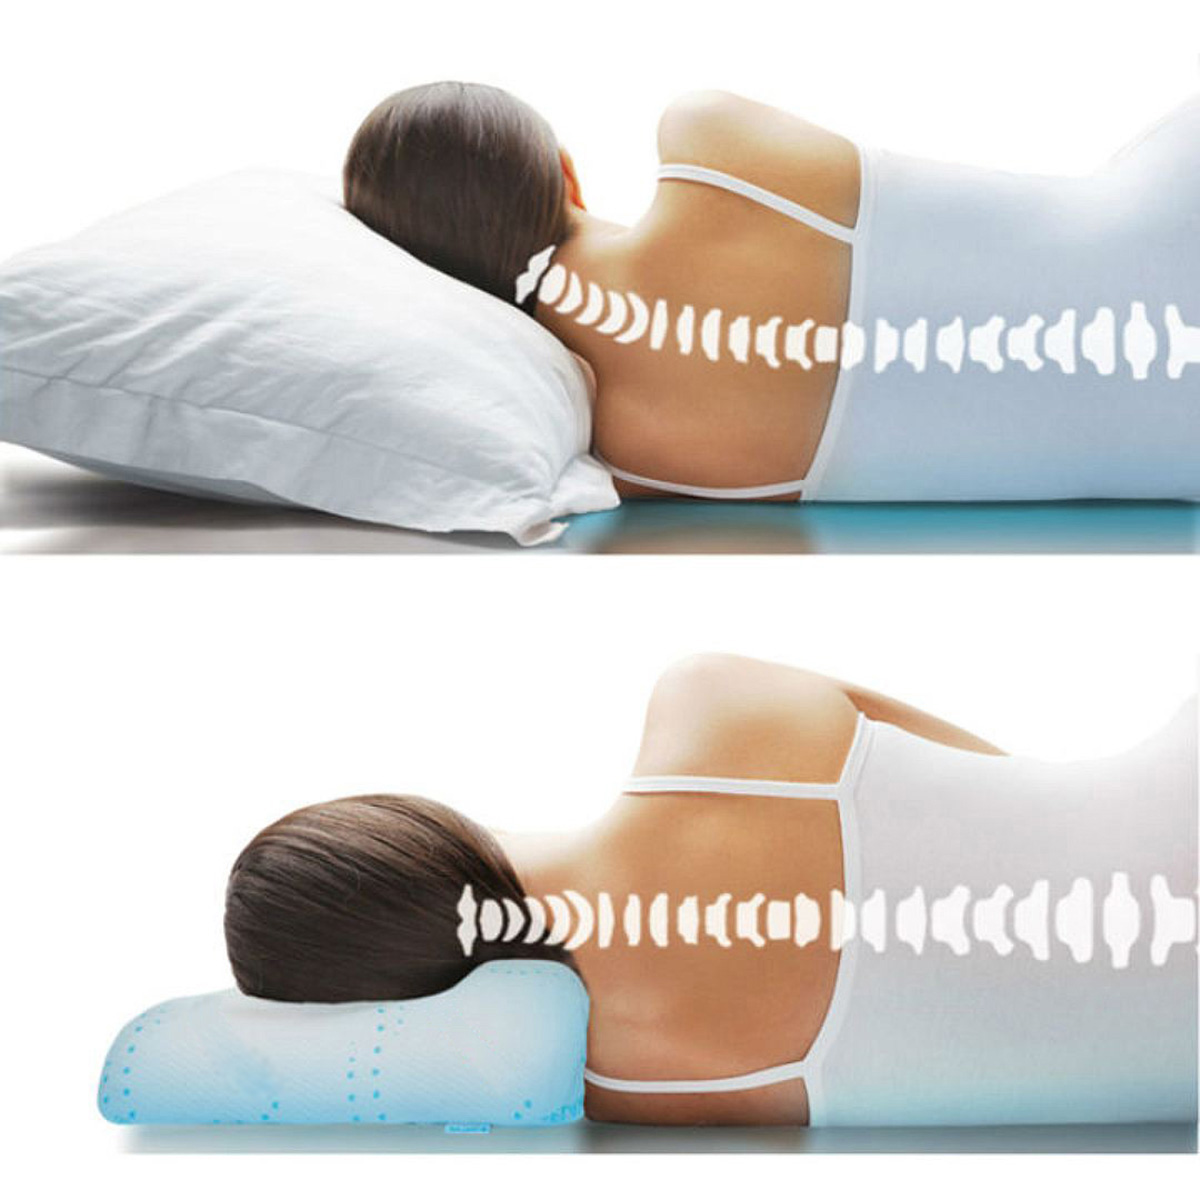 Уход за ортопедическими подушками: чистка, стирка, проветривание